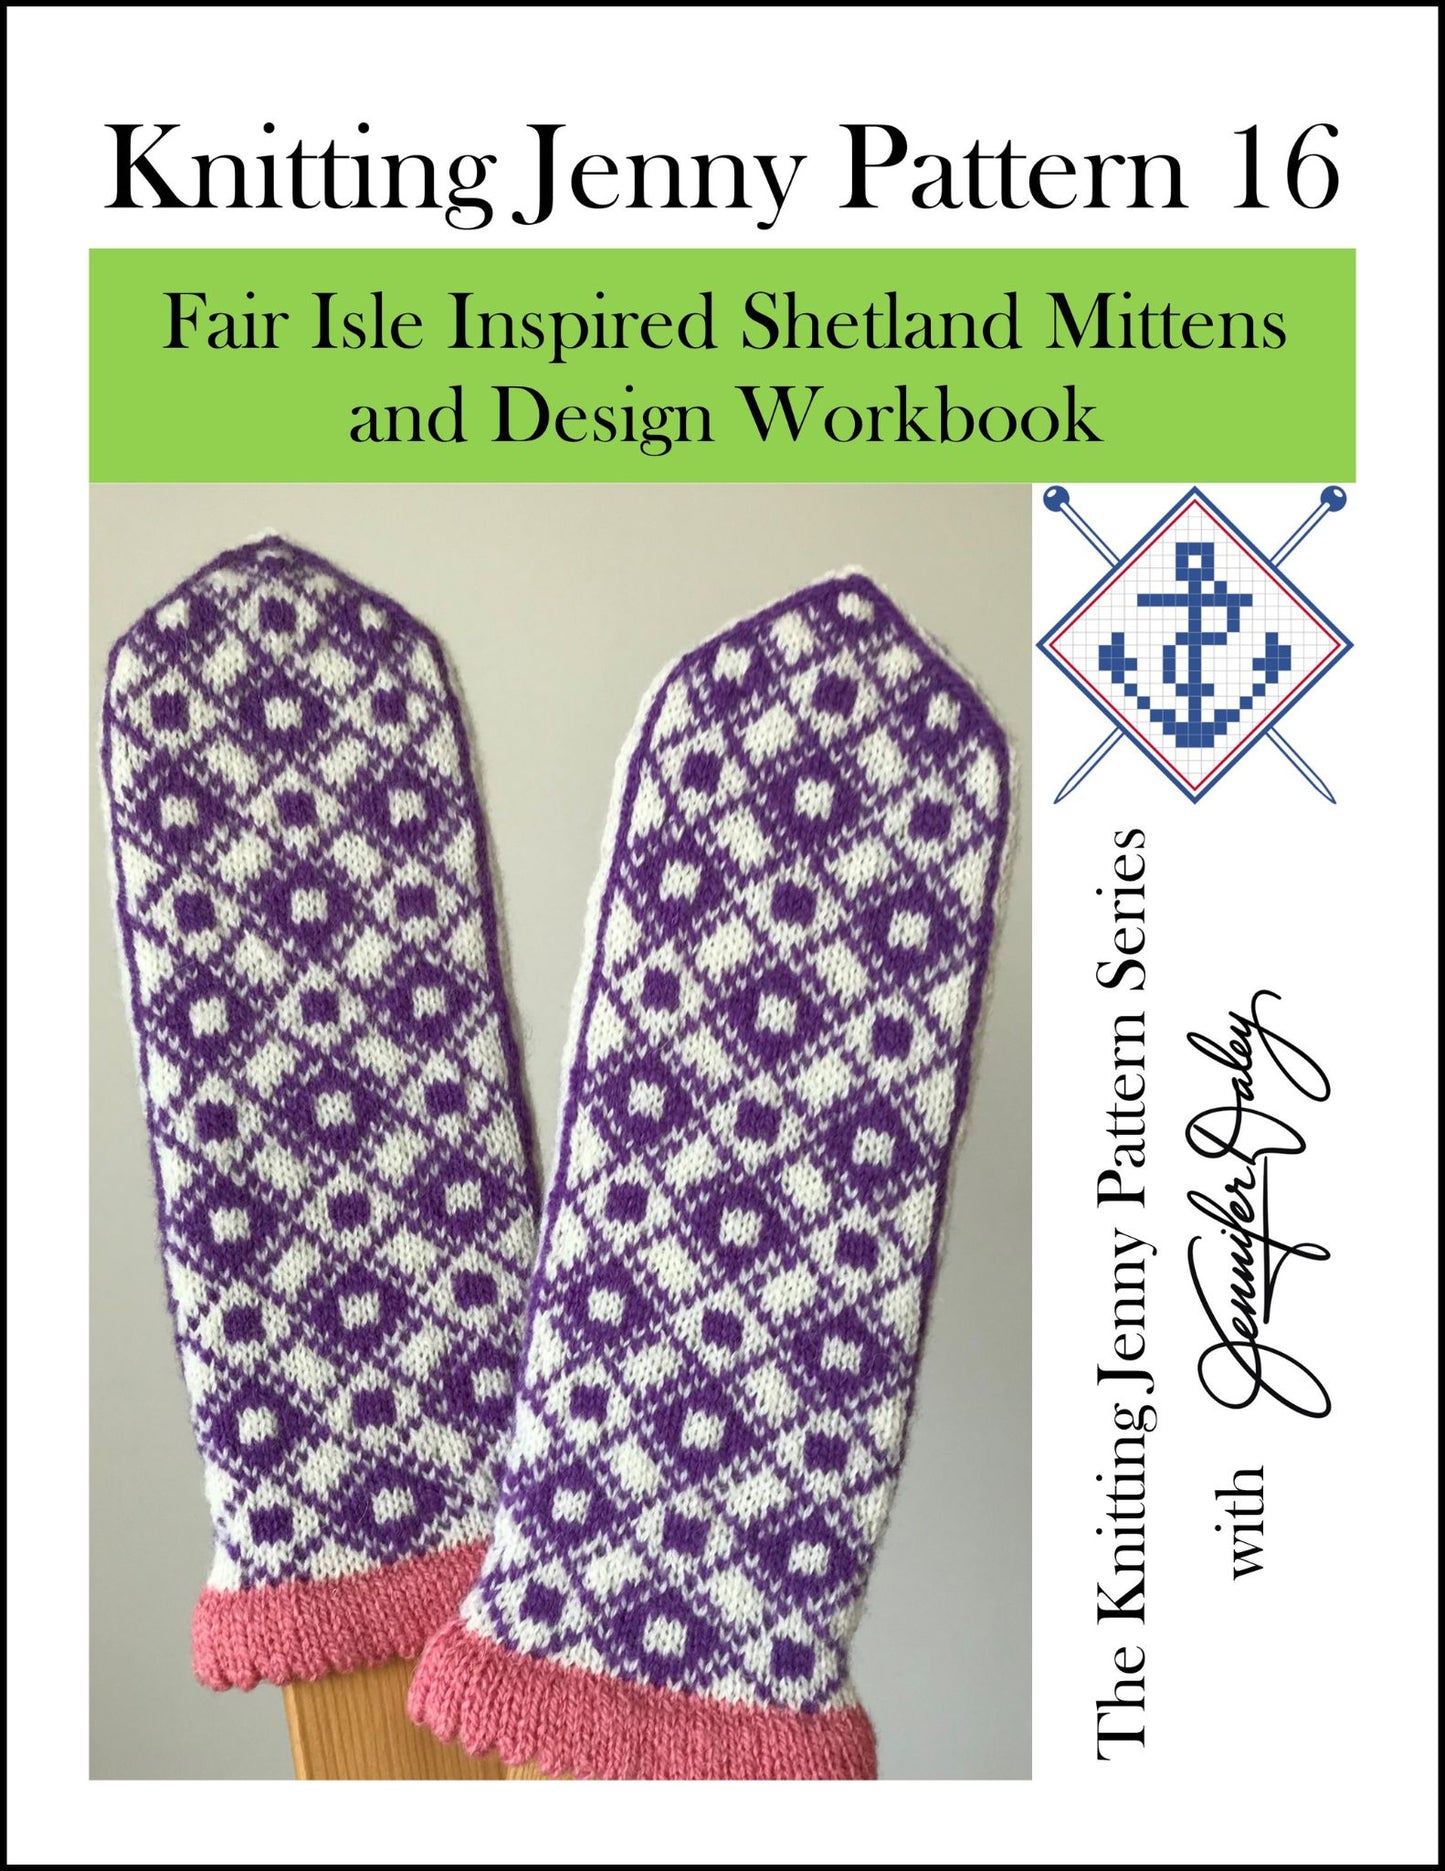 Knitting Jenny Pattern 16: Fair Isle Inspired Shetland Mittens and Design Workbook